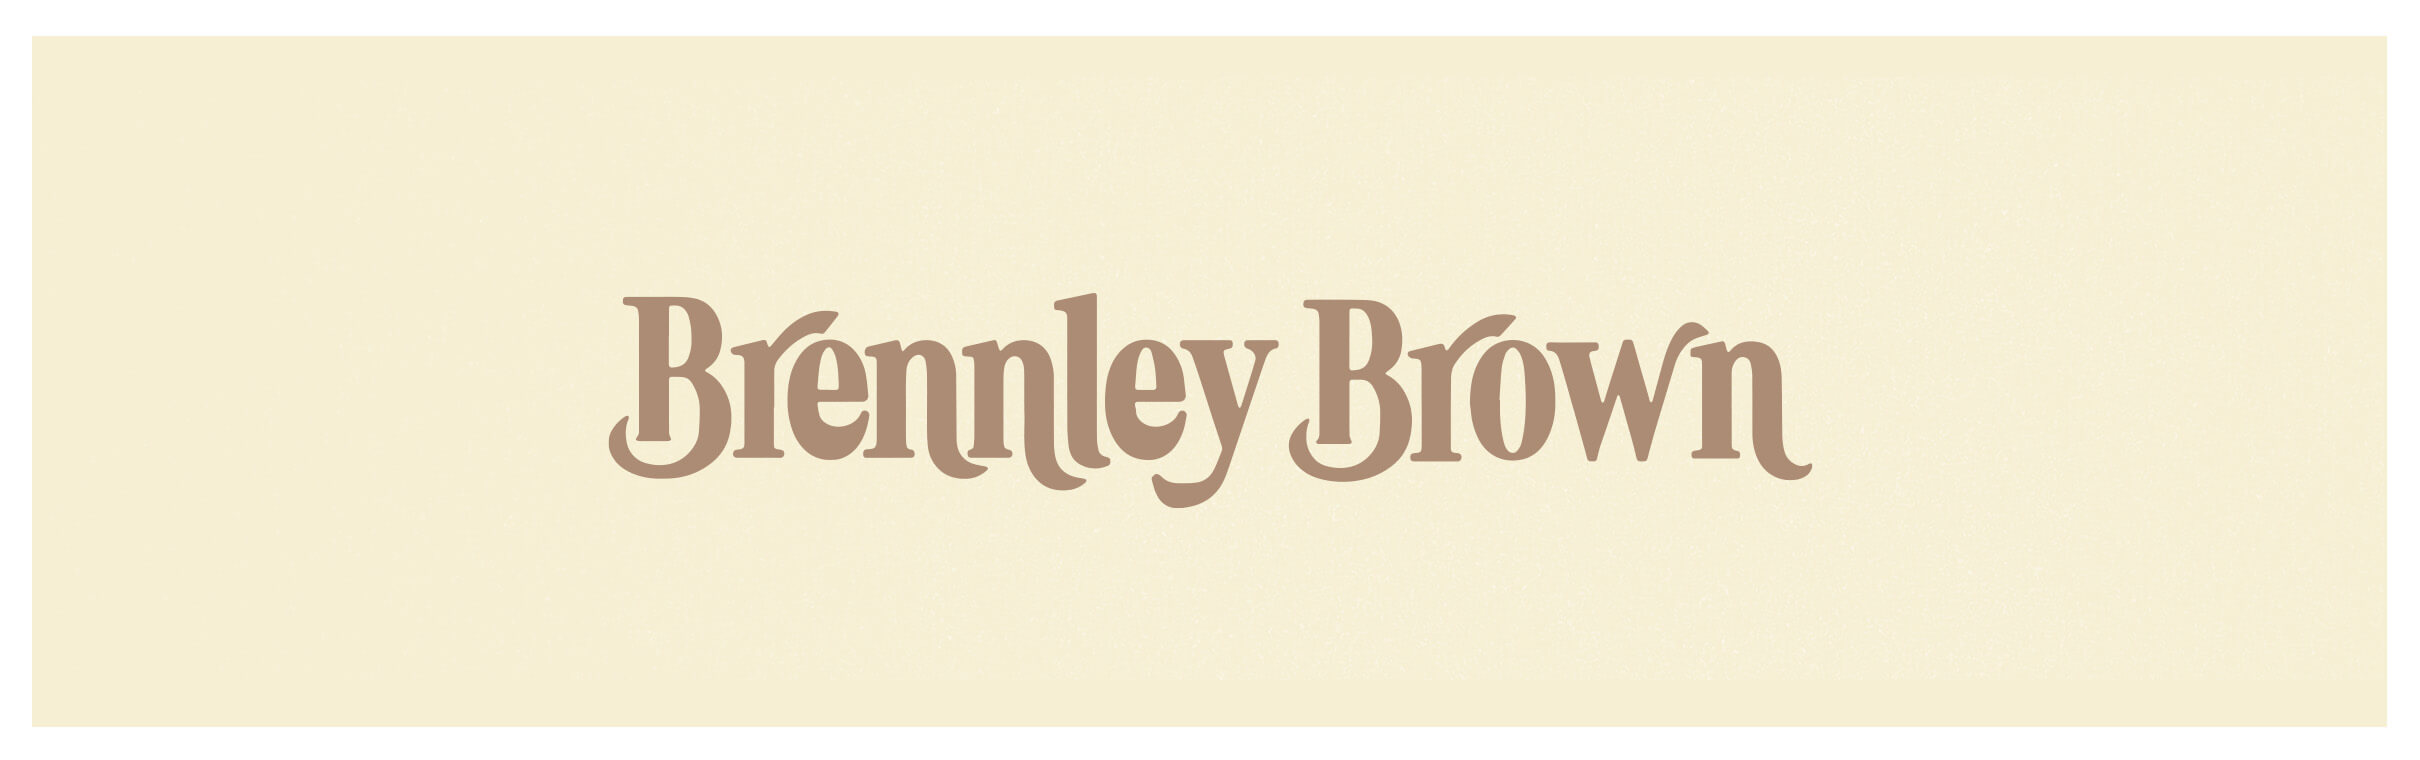 Brennley Brown